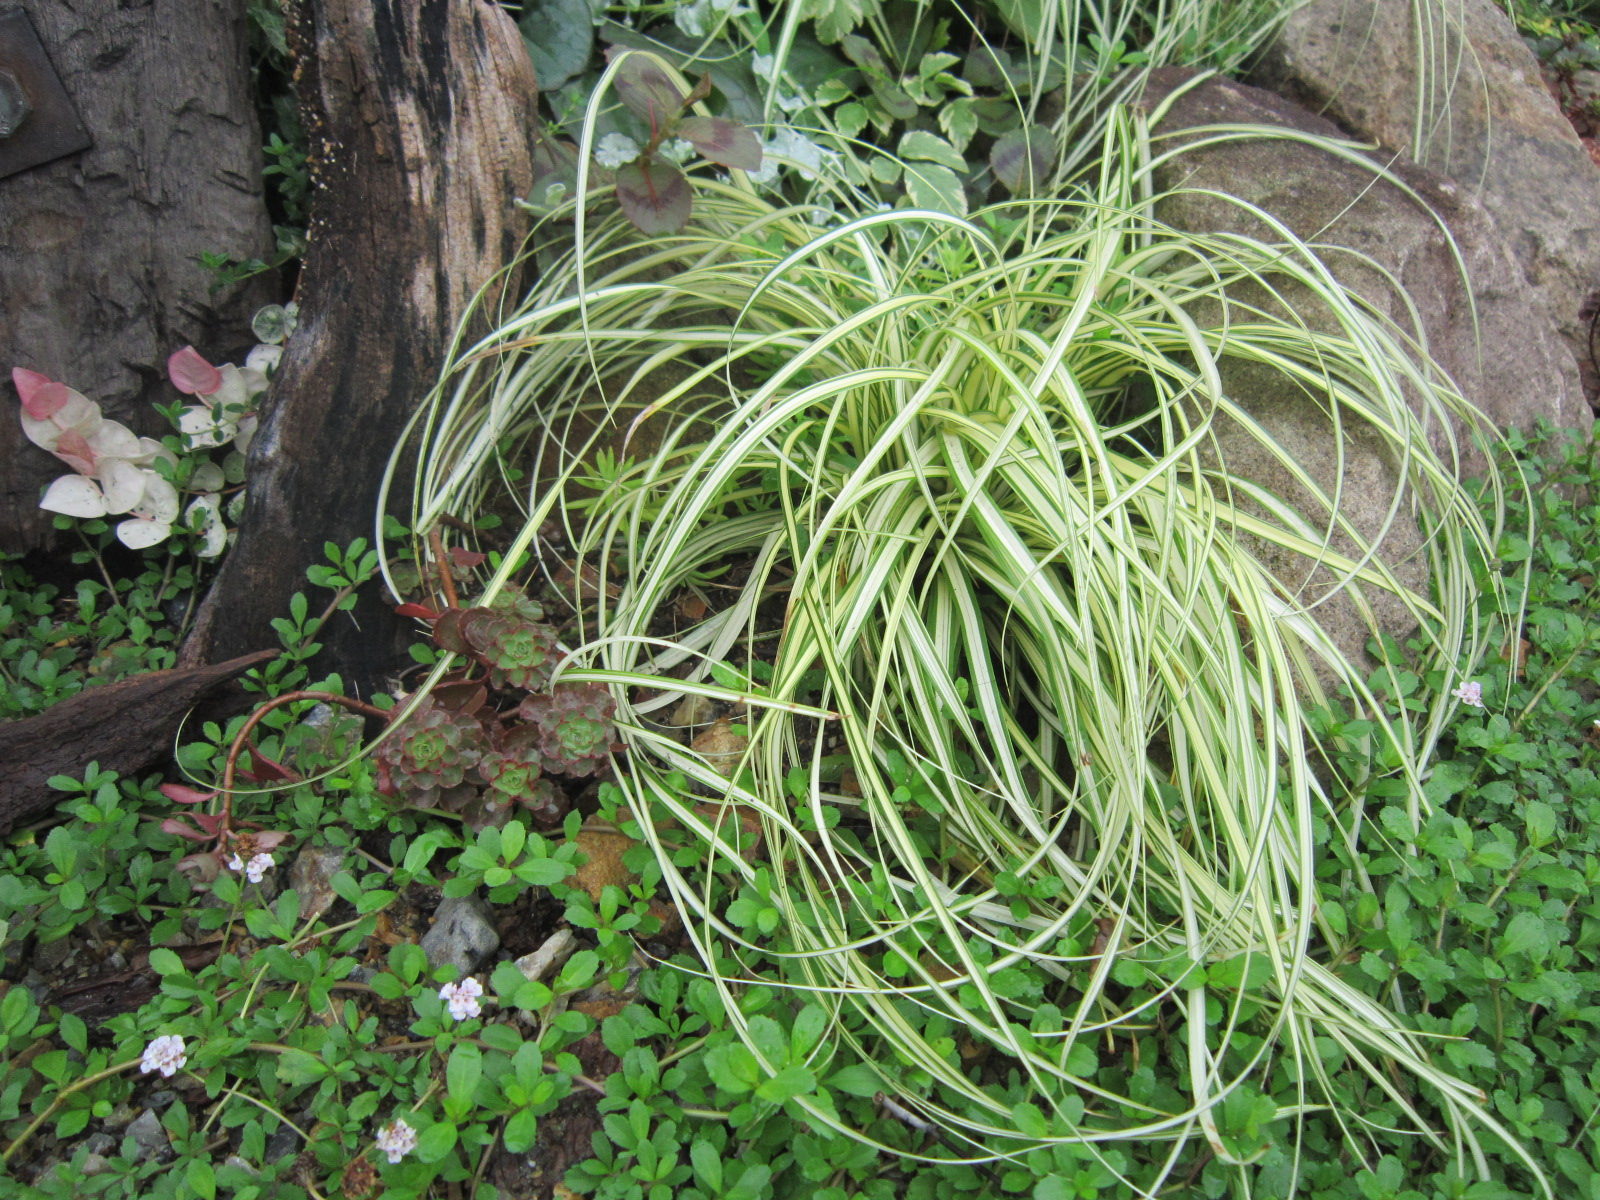 ﾍﾞｱｸﾞﾗｽ学 名 : Carex oshimensis ' Evergold'